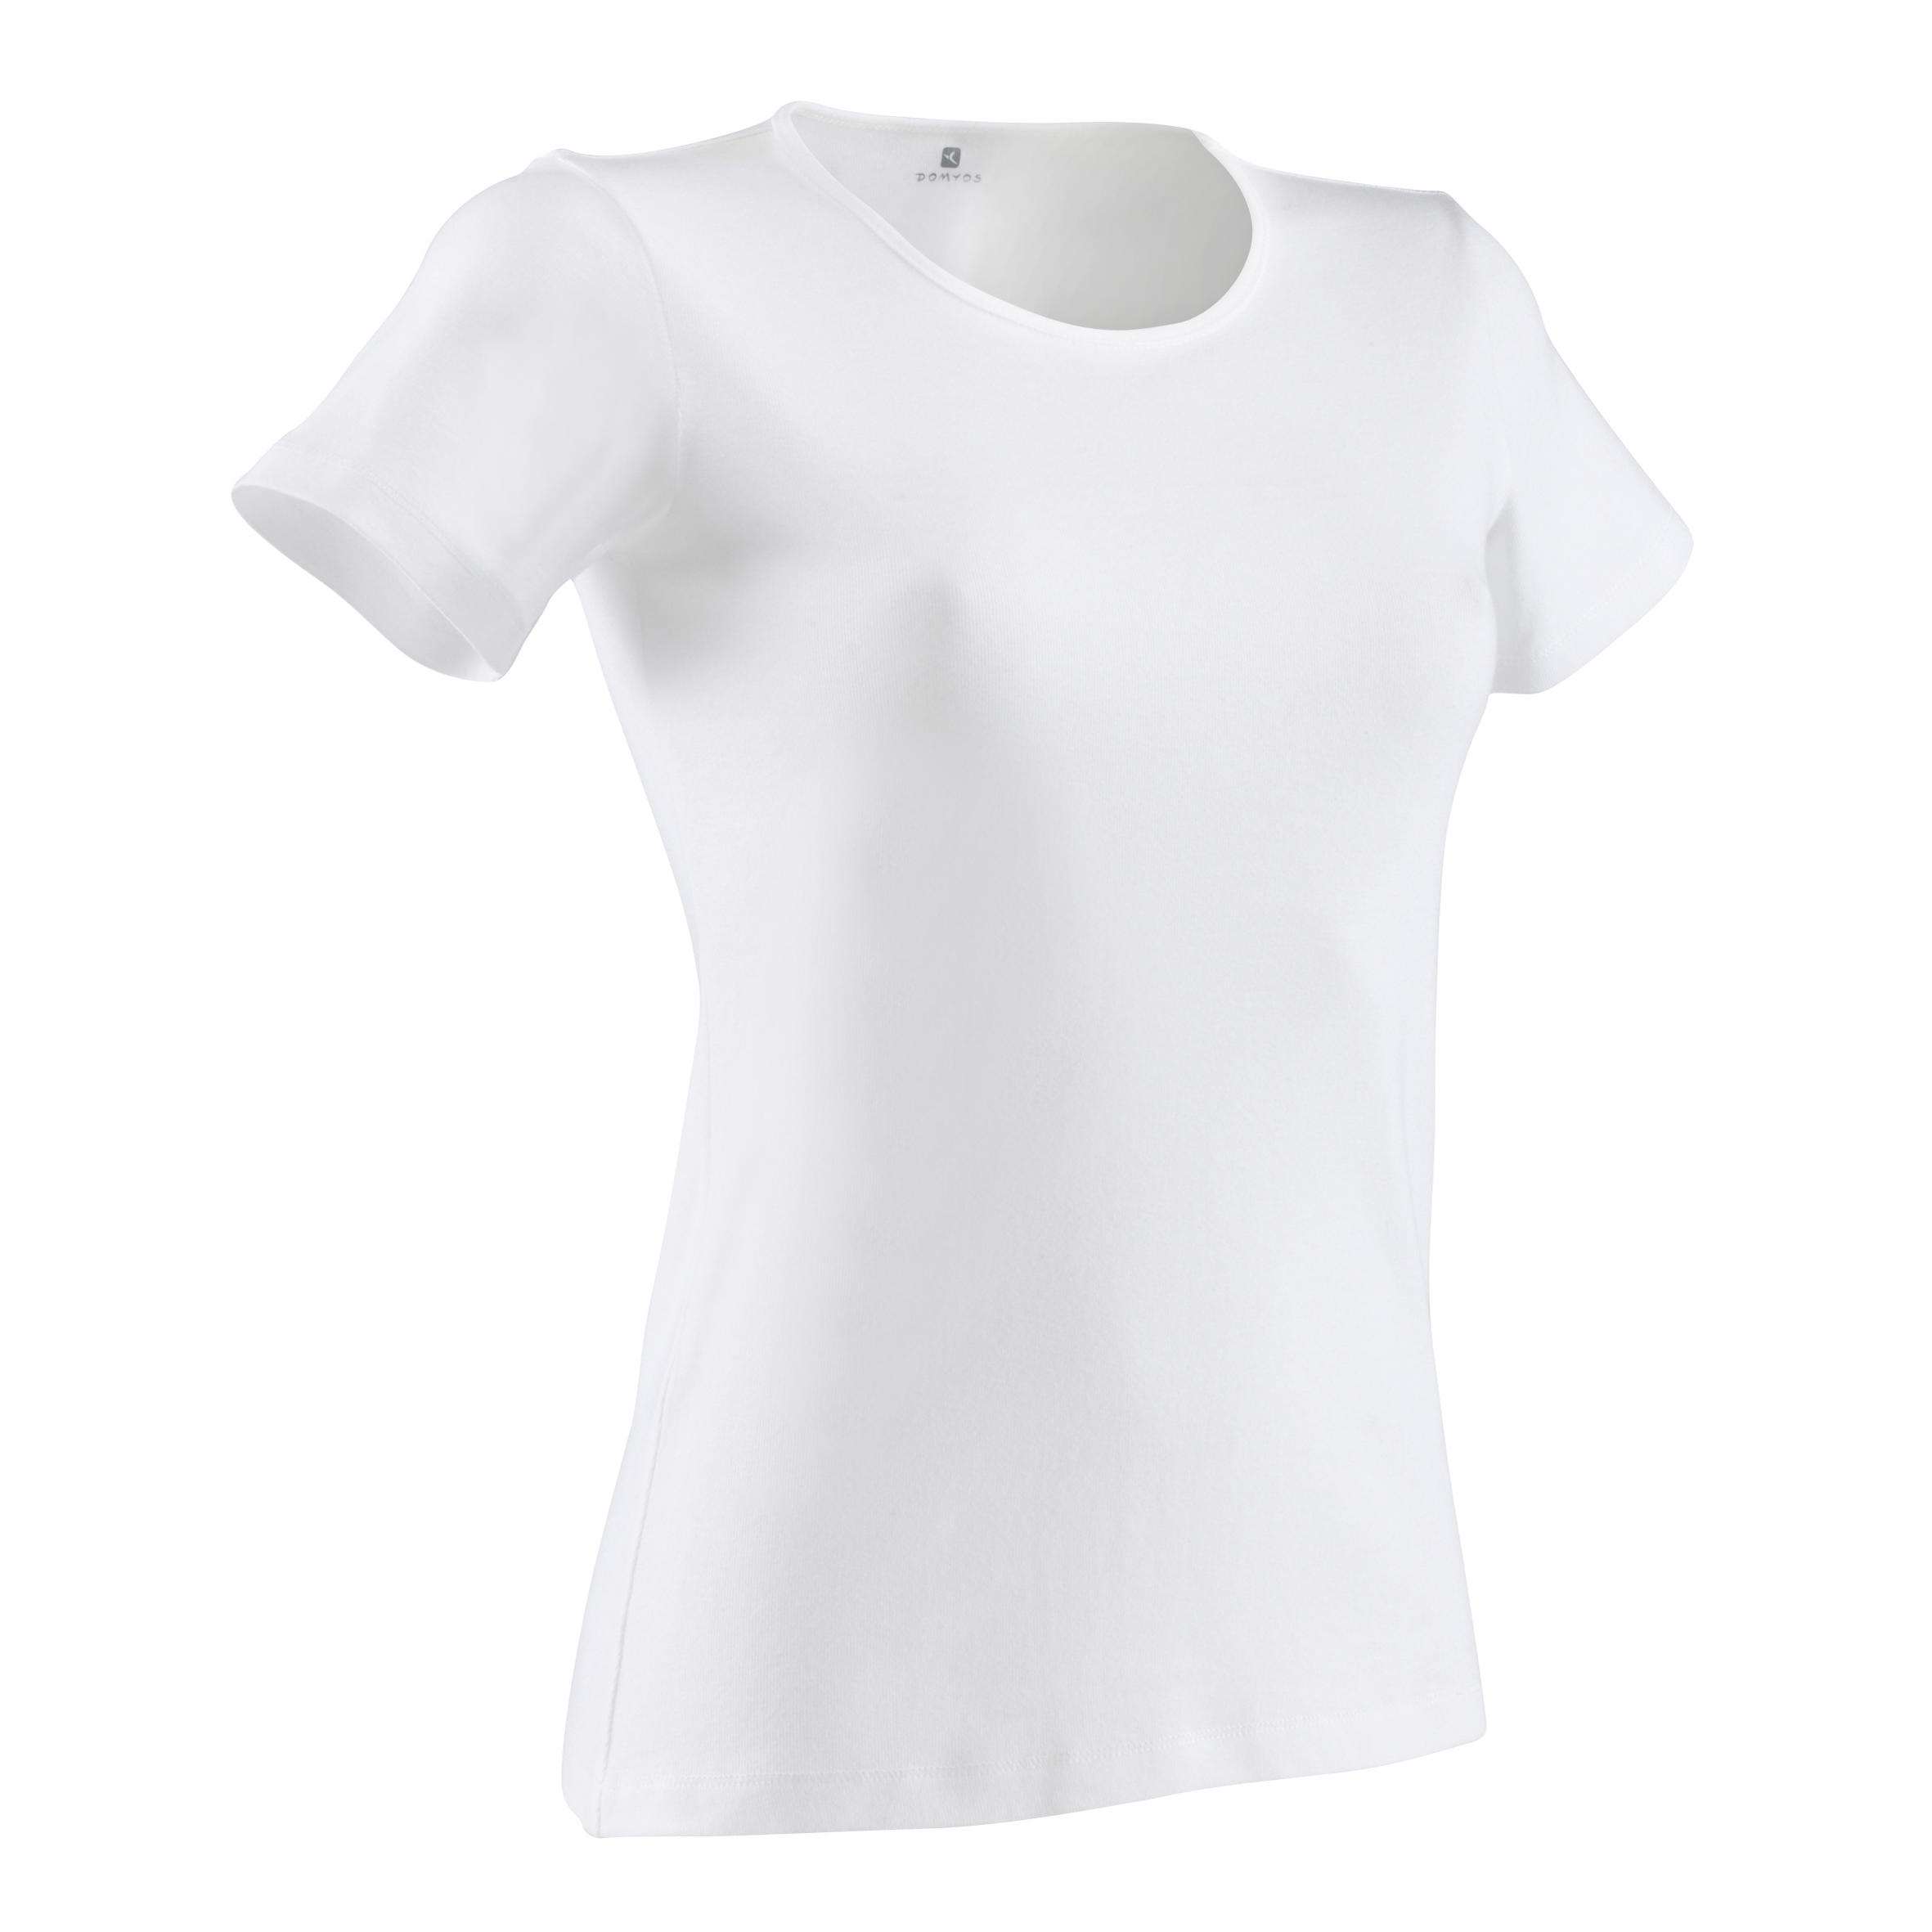 blusa blanca deportiva baratas online